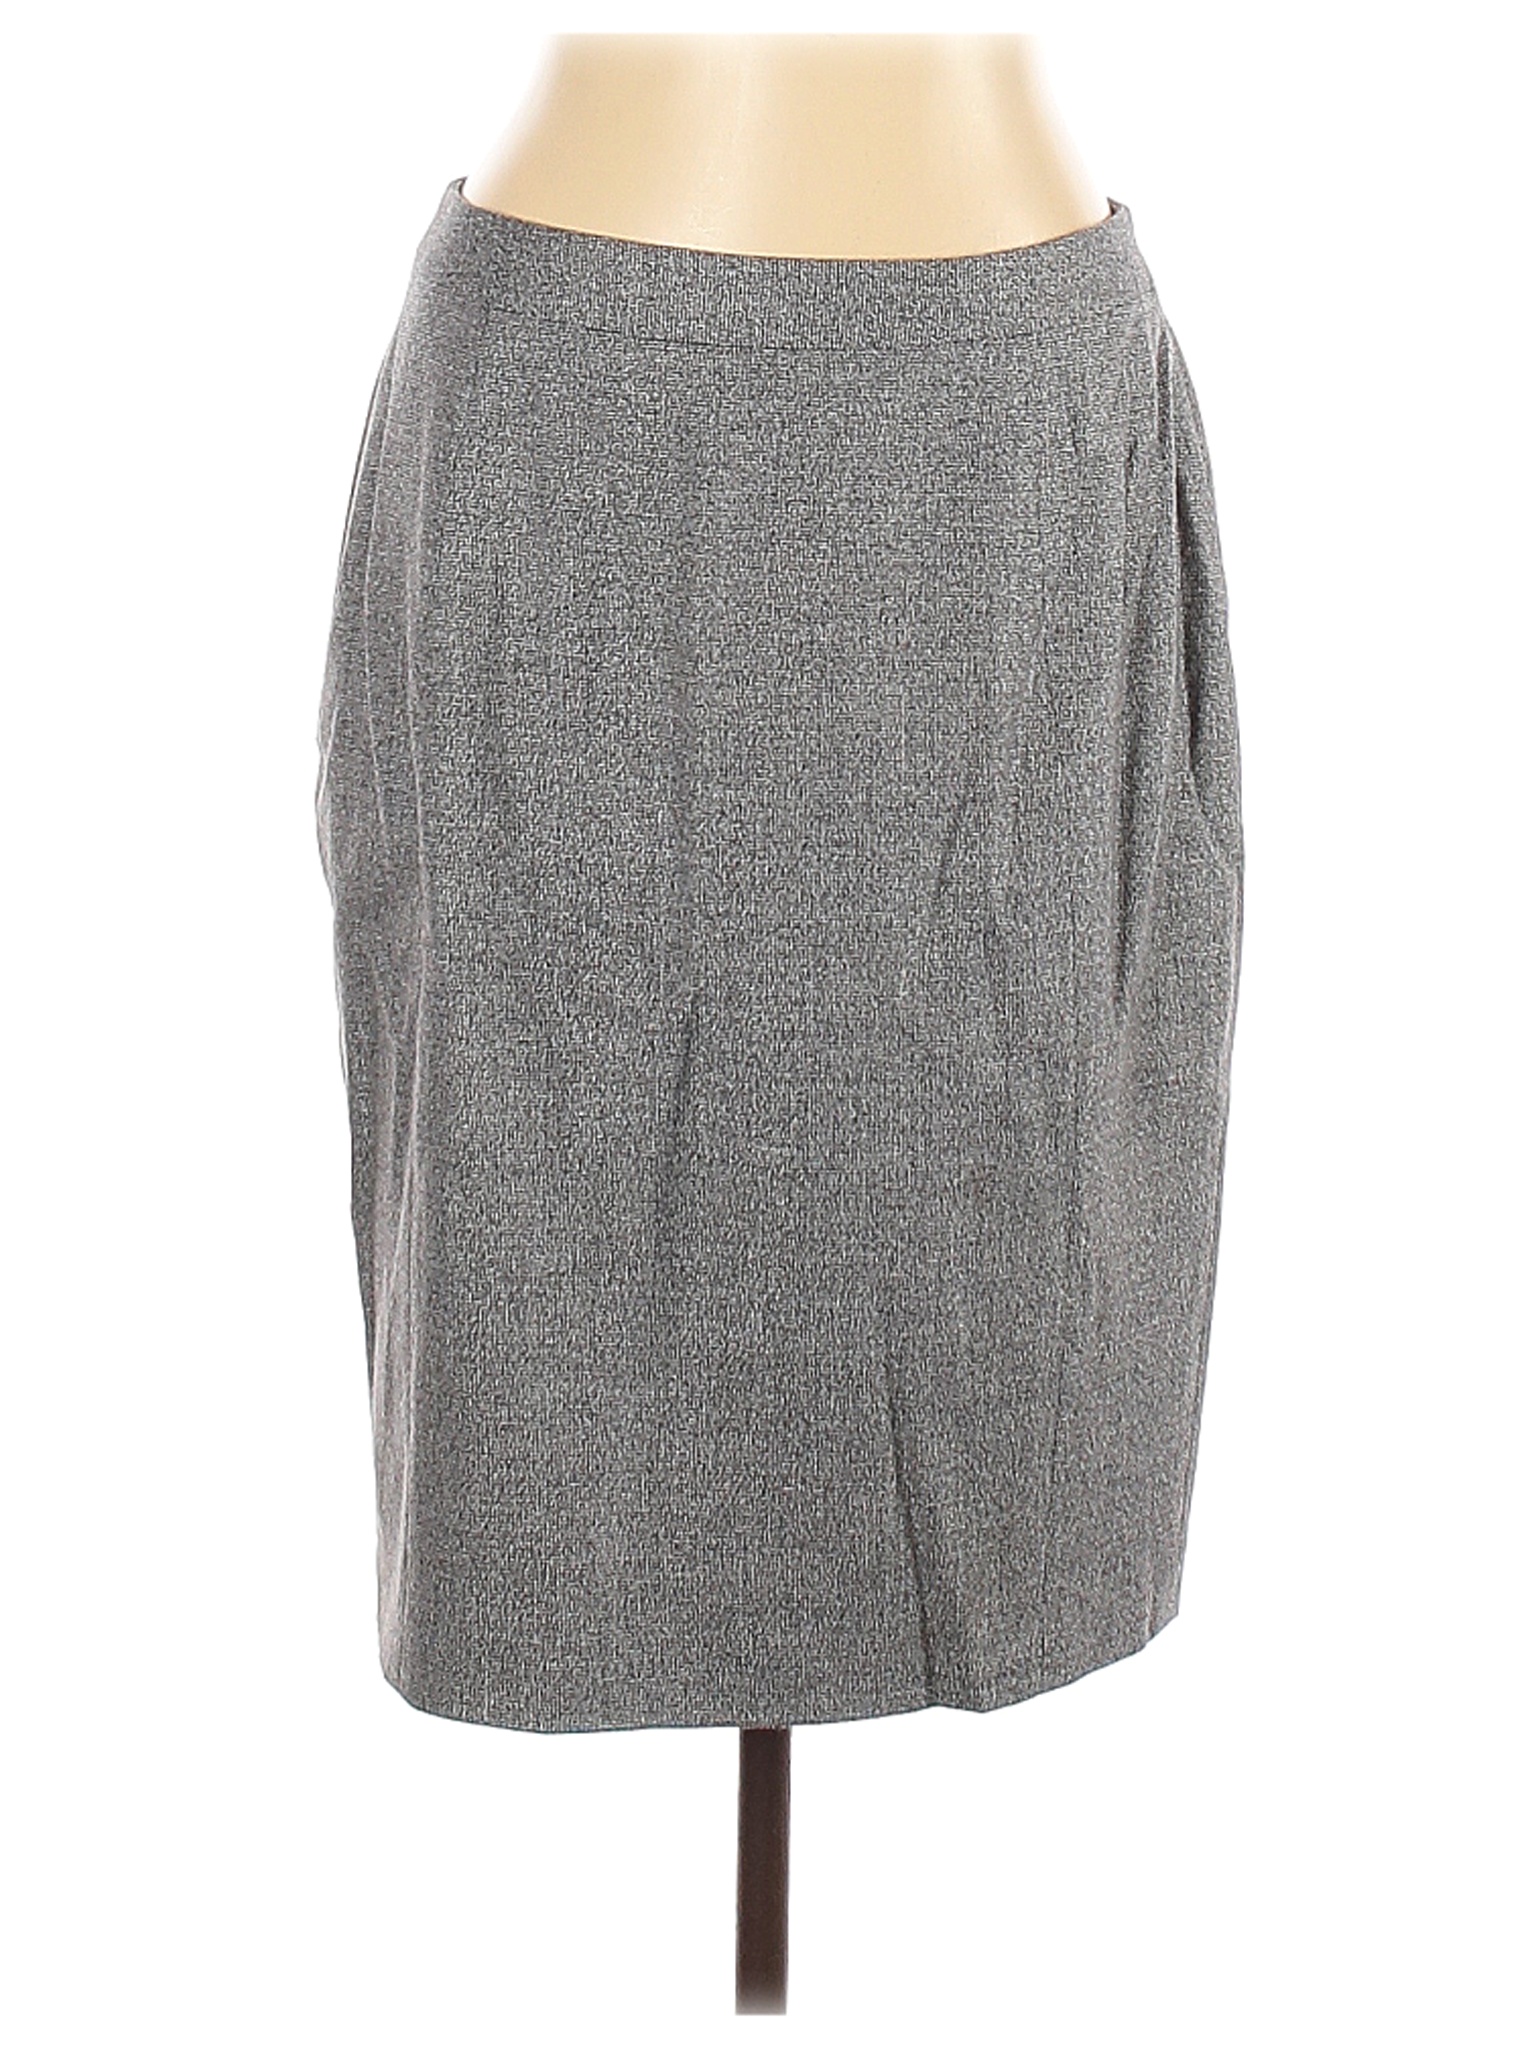 Reiss Women Gray Wool Skirt 10 | eBay